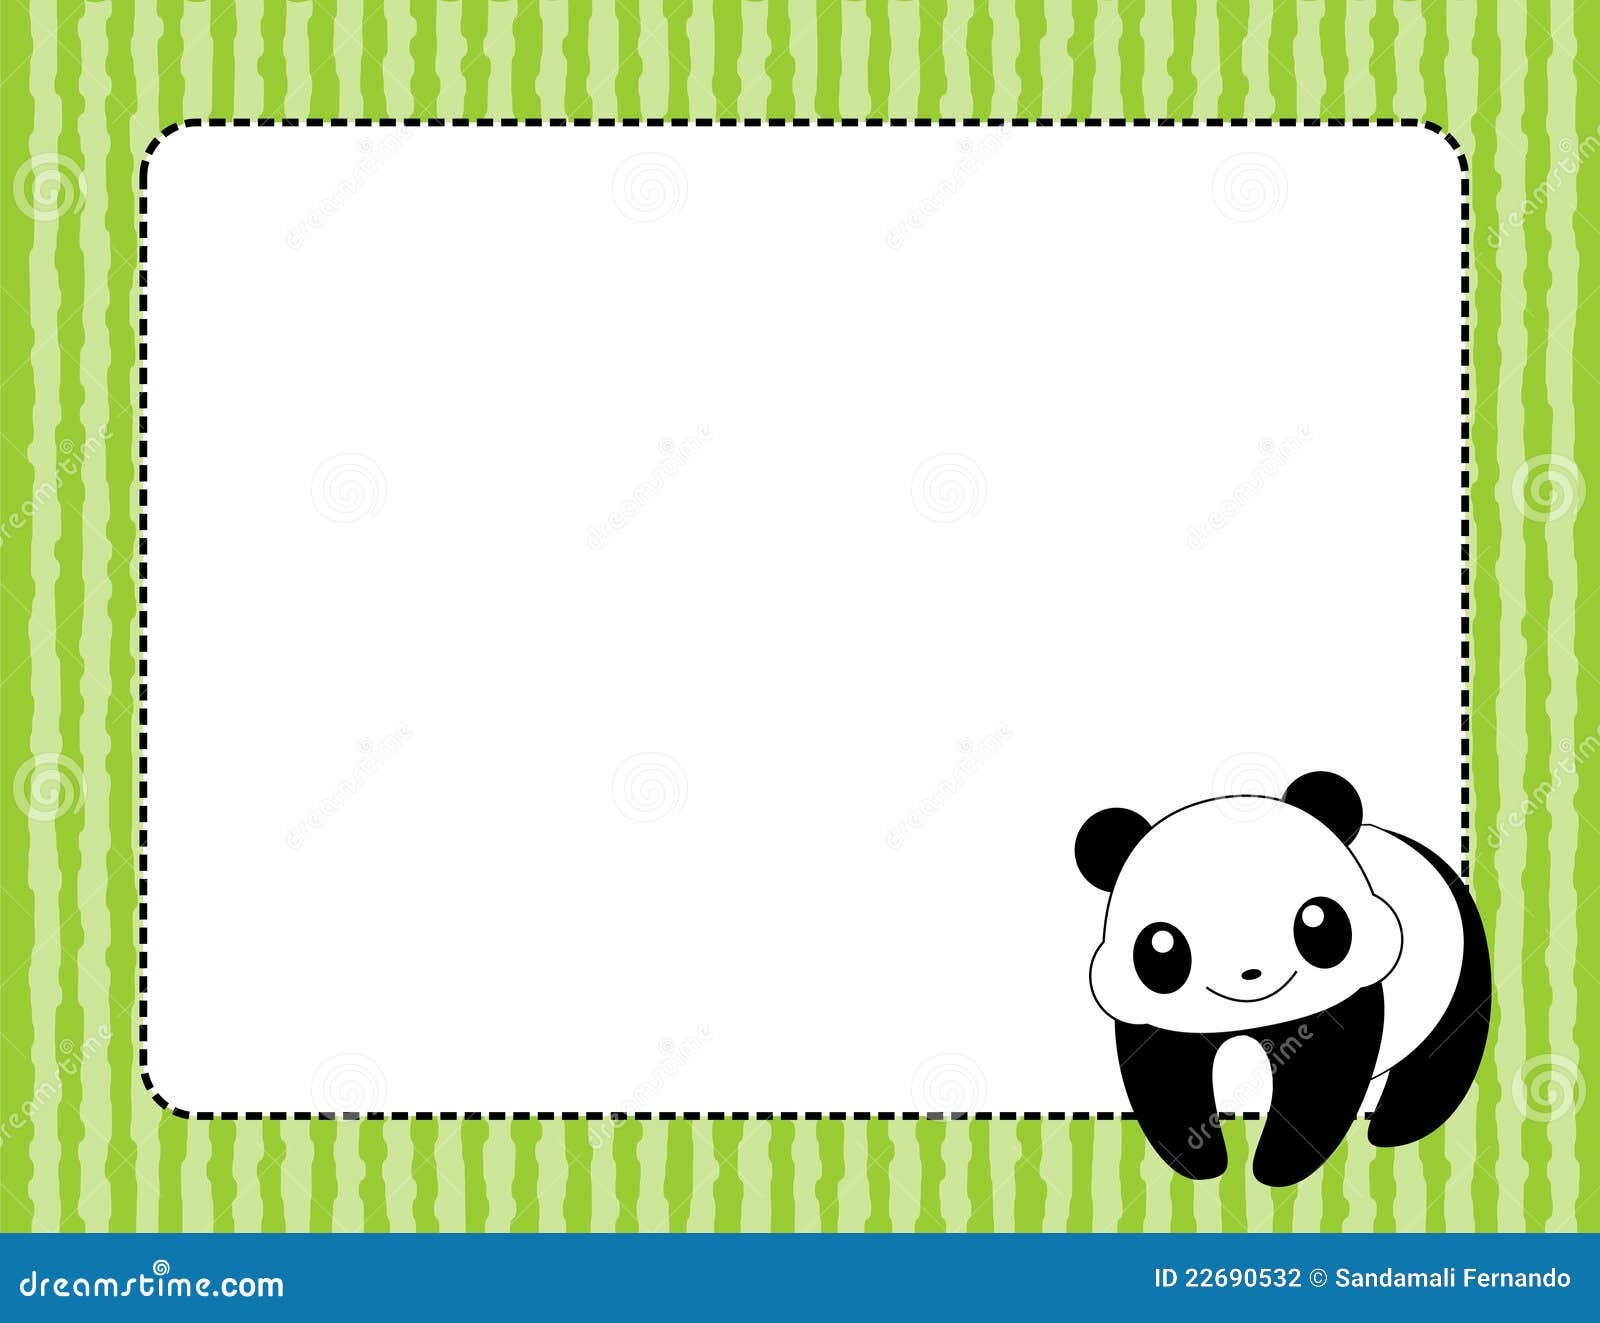 clipart panda frame - photo #7